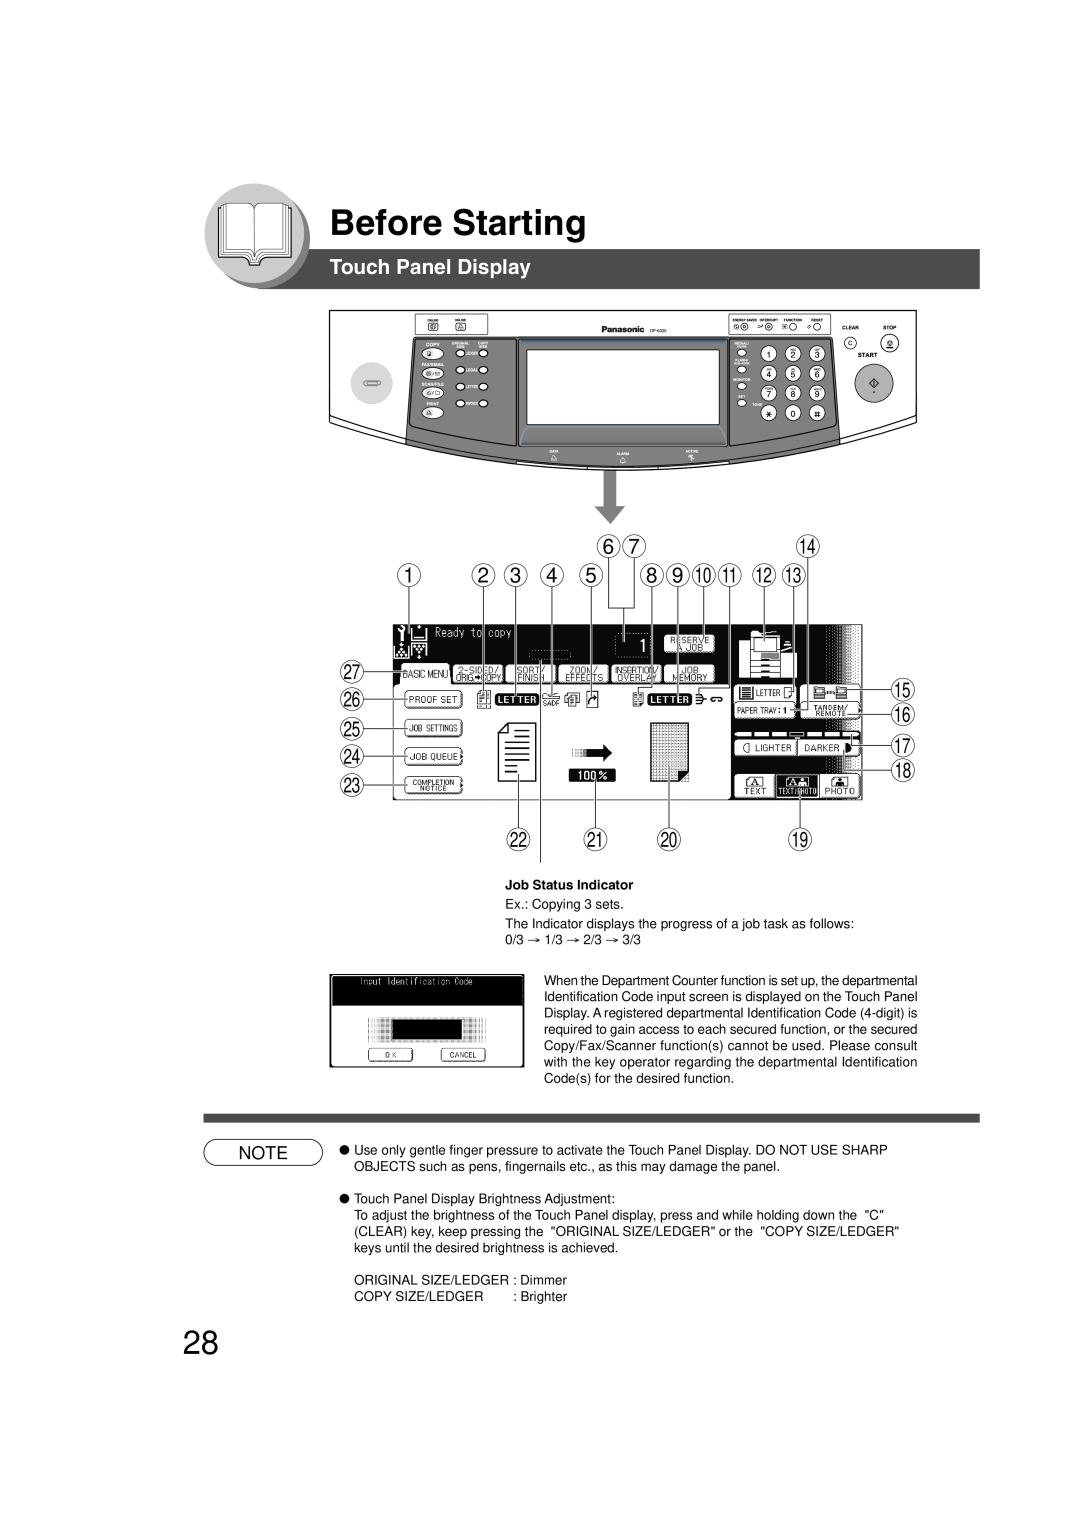 Panasonic 4520, 6020 manual Touch Panel Display, Before Starting, Job Status Indicator 